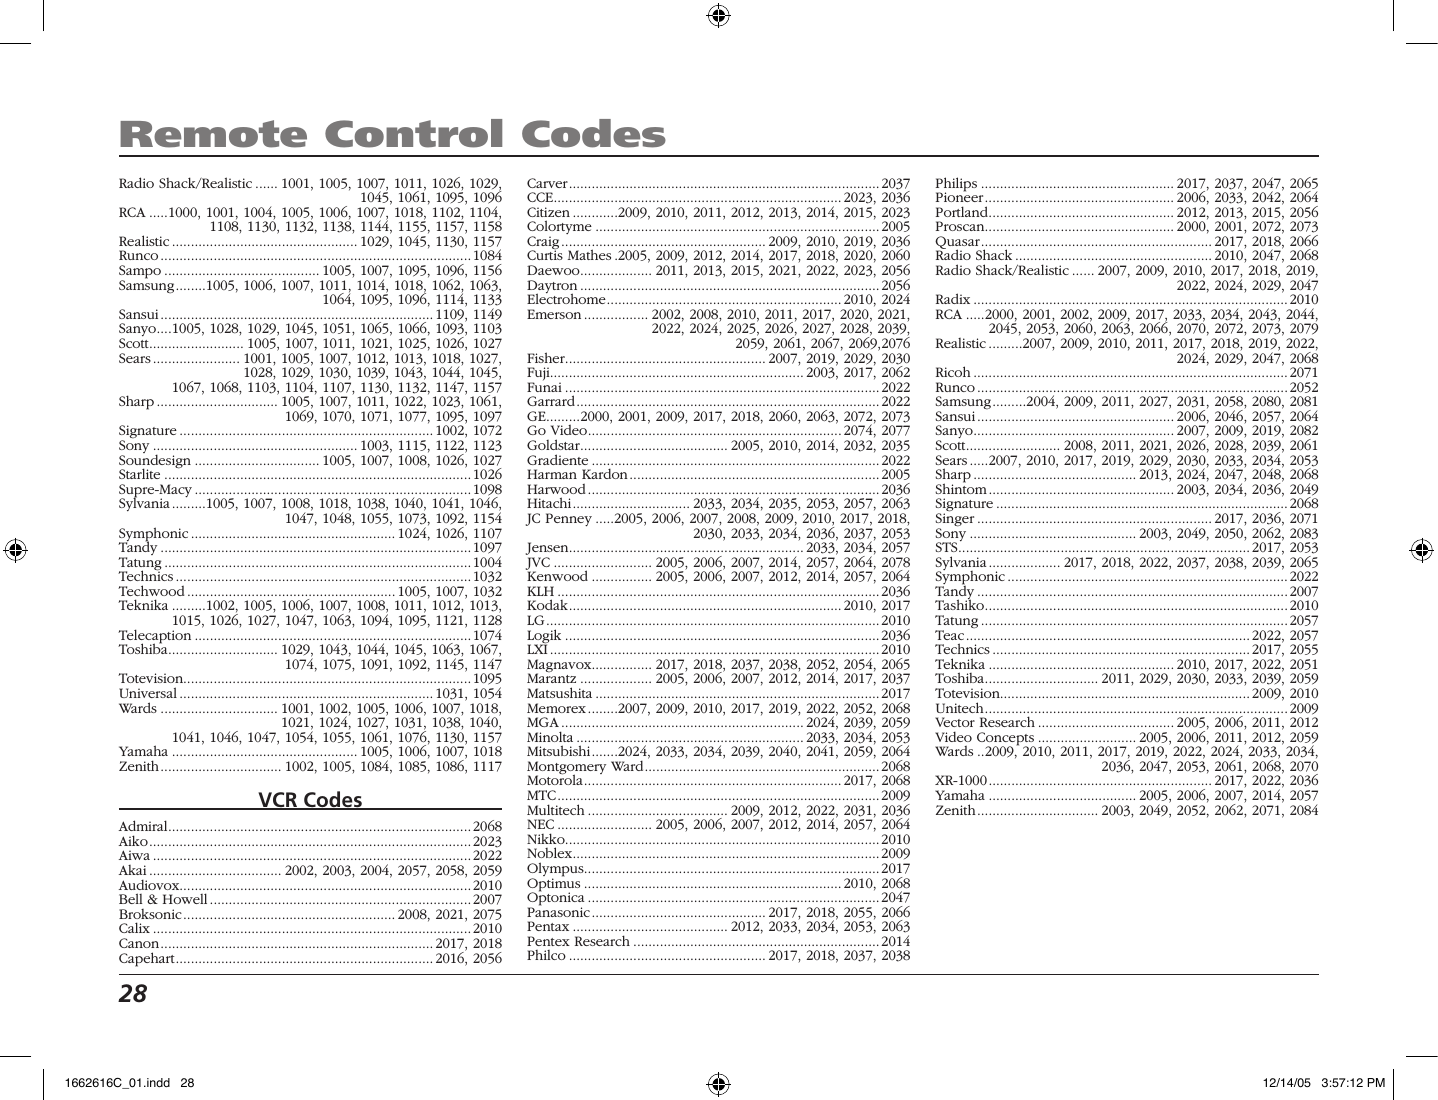 28 Remote Control CodesRadio Shack/Realistic ...... 1001, 1005, 1007, 1011, 1026, 1029, 1045, 1061, 1095, 1096RCA .....1000, 1001, 1004, 1005, 1006, 1007, 1018, 1102, 1104, 1108, 1130, 1132, 1138, 1144, 1155, 1157, 1158Realistic ................................................. 1029, 1045, 1130, 1157Runco ..................................................................................1084Sampo ......................................... 1005, 1007, 1095, 1096, 1156Samsung ........1005, 1006, 1007, 1011, 1014, 1018, 1062, 1063, 1064, 1095, 1096, 1114, 1133Sansui ........................................................................ 1109, 1149Sanyo ....1005, 1028, 1029, 1045, 1051, 1065, 1066, 1093, 1103Scott ......................... 1005, 1007, 1011, 1021, 1025, 1026, 1027Sears ....................... 1001, 1005, 1007, 1012, 1013, 1018, 1027, 1028, 1029, 1030, 1039, 1043, 1044, 1045, 1067, 1068, 1103, 1104, 1107, 1130, 1132, 1147, 1157Sharp ................................ 1005, 1007, 1011, 1022, 1023, 1061, 1069, 1070, 1071, 1077, 1095, 1097Signature ................................................................... 1002, 1072Sony ...................................................... 1003, 1115, 1122, 1123Soundesign ................................. 1005, 1007, 1008, 1026, 1027Starlite .................................................................................1026Supre-Macy .........................................................................1098Sylvania .........1005, 1007, 1008, 1018, 1038, 1040, 1041, 1046, 1047, 1048, 1055, 1073, 1092, 1154Symphonic ...................................................... 1024, 1026, 1107Tandy ..................................................................................1097Tatung .................................................................................1004Technics .............................................................................. 1032Techwood ....................................................... 1005, 1007, 1032Teknika .........1002, 1005, 1006, 1007, 1008, 1011, 1012, 1013, 1015, 1026, 1027, 1047, 1063, 1094, 1095, 1121, 1128Telecaption .........................................................................1074Toshiba ............................. 1029, 1043, 1044, 1045, 1063, 1067, 1074, 1075, 1091, 1092, 1145, 1147Totevision............................................................................1095Universal ................................................................... 1031, 1054Wards ............................... 1001, 1002, 1005, 1006, 1007, 1018, 1021, 1024, 1027, 1031, 1038, 1040, 1041, 1046, 1047, 1054, 1055, 1061, 1076, 1130, 1157Yamaha ................................................. 1005, 1006, 1007, 1018Zenith ................................ 1002, 1005, 1084, 1085, 1086, 1117VCR CodesAdmiral ................................................................................2068Aiko .....................................................................................2023Aiwa ....................................................................................2022Akai ................................... 2002, 2003, 2004, 2057, 2058, 2059Audiovox.............................................................................2010Bell &amp; Howell .....................................................................2007Broksonic ........................................................ 2008, 2021, 2075Calix ....................................................................................2010Canon ........................................................................2017, 2018Capehart .................................................................... 2016, 2056Carver ..................................................................................2037CCE ............................................................................2023, 2036Citizen ............2009, 2010, 2011, 2012, 2013, 2014, 2015, 2023Colortyme ...........................................................................2005Craig ...................................................... 2009, 2010, 2019, 2036Curtis Mathes .2005, 2009, 2012, 2014, 2017, 2018, 2020, 2060Daewoo ................... 2011, 2013, 2015, 2021, 2022, 2023, 2056Daytron ...............................................................................2056Electrohome .............................................................. 2010, 2024Emerson ................. 2002, 2008, 2010, 2011, 2017, 2020, 2021,  2022, 2024, 2025, 2026, 2027, 2028, 2039,  2059, 2061, 2067, 2069,2076Fisher ..................................................... 2007, 2019, 2029, 2030Fuji................................................................... 2003, 2017, 2062Funai ................................................................................... 2022Garrard ................................................................................2022GE.........2000, 2001, 2009, 2017, 2018, 2060, 2063, 2072, 2073Go Video ................................................................... 2074, 2077Goldstar ....................................... 2005, 2010, 2014, 2032, 2035Gradiente ............................................................................2022Harman Kardon .................................................................. 2005Harwood .............................................................................2036Hitachi ............................... 2033, 2034, 2035, 2053, 2057, 2063JC Penney .....2005, 2006, 2007, 2008, 2009, 2010, 2017, 2018, 2030, 2033, 2034, 2036, 2037, 2053Jensen .............................................................. 2033, 2034, 2057JVC .......................... 2005, 2006, 2007, 2014, 2057, 2064, 2078Kenwood ................ 2005, 2006, 2007, 2012, 2014, 2057, 2064KLH .....................................................................................2036Kodak ........................................................................ 2010, 2017LG ........................................................................................2010Logik ...................................................................................2036LXI ....................................................................................... 2010Magnavox................ 2017, 2018, 2037, 2038, 2052, 2054, 2065Marantz ................... 2005, 2006, 2007, 2012, 2014, 2017, 2037Matsushita ...........................................................................2017Memorex ........2007, 2009, 2010, 2017, 2019, 2022, 2052, 2068MGA ................................................................ 2024, 2039, 2059Minolta ............................................................ 2033, 2034, 2053Mitsubishi .......2024, 2033, 2034, 2039, 2040, 2041, 2059, 2064Montgomery Ward ..............................................................2068Motorola .................................................................... 2017, 2068MTC .....................................................................................2009Multitech ..................................... 2009, 2012, 2022, 2031, 2036NEC ......................... 2005, 2006, 2007, 2012, 2014, 2057, 2064Nikko...................................................................................2010Noblex ................................................................................. 2009Olympus..............................................................................2017Optimus .................................................................... 2010, 2068Optonica .............................................................................2047Panasonic .............................................. 2017, 2018, 2055, 2066Pentax ......................................... 2012, 2033, 2034, 2053, 2063Pentex Research ................................................................. 2014Philco .................................................... 2017, 2018, 2037, 2038Philips ................................................... 2017, 2037, 2047, 2065Pioneer .................................................. 2006, 2033, 2042, 2064Portland ................................................. 2012, 2013, 2015, 2056Proscan .................................................. 2000, 2001, 2072, 2073Quasar ............................................................. 2017, 2018, 2066Radio Shack .................................................... 2010, 2047, 2068Radio Shack/Realistic ...... 2007, 2009, 2010, 2017, 2018, 2019, 2022, 2024, 2029, 2047Radix ...................................................................................2010RCA .....2000, 2001, 2002, 2009, 2017, 2033, 2034, 2043, 2044, 2045, 2053, 2060, 2063, 2066, 2070, 2072, 2073, 2079Realistic .........2007, 2009, 2010, 2011, 2017, 2018, 2019, 2022, 2024, 2029, 2047, 2068Ricoh ...................................................................................2071Runco ..................................................................................2052Samsung .........2004, 2009, 2011, 2027, 2031, 2058, 2080, 2081Sansui .................................................... 2006, 2046, 2057, 2064Sanyo ..................................................... 2007, 2009, 2019, 2082Scott ......................... 2008, 2011, 2021, 2026, 2028, 2039, 2061Sears .....2007, 2010, 2017, 2019, 2029, 2030, 2033, 2034, 2053Sharp ........................................... 2013, 2024, 2047, 2048, 2068Shintom ................................................. 2003, 2034, 2036, 2049Signature .............................................................................2068Singer .............................................................. 2017, 2036, 2071Sony ............................................ 2003, 2049, 2050, 2062, 2083STS ............................................................................. 2017, 2053Sylvania ................... 2017, 2018, 2022, 2037, 2038, 2039, 2065Symphonic ..........................................................................2022Tandy ..................................................................................2007Tashiko ................................................................................2010Tatung .................................................................................2057Teac ........................................................................... 2022, 2057Technics .................................................................... 2017, 2055Teknika ................................................. 2010, 2017, 2022, 2051Toshiba .............................. 2011, 2029, 2030, 2033, 2039, 2059Totevision.................................................................. 2009, 2010Unitech ................................................................................ 2009Vector Research .................................... 2005, 2006, 2011, 2012Video Concepts .......................... 2005, 2006, 2011, 2012, 2059Wards ..2009, 2010, 2011, 2017, 2019, 2022, 2024, 2033, 2034, 2036, 2047, 2053, 2061, 2068, 2070XR-1000 ........................................................... 2017, 2022, 2036Yamaha ....................................... 2005, 2006, 2007, 2014, 2057Zenith ................................ 2003, 2049, 2052, 2062, 2071, 20841662616C_01.indd   28 12/14/05   3:57:12 PM